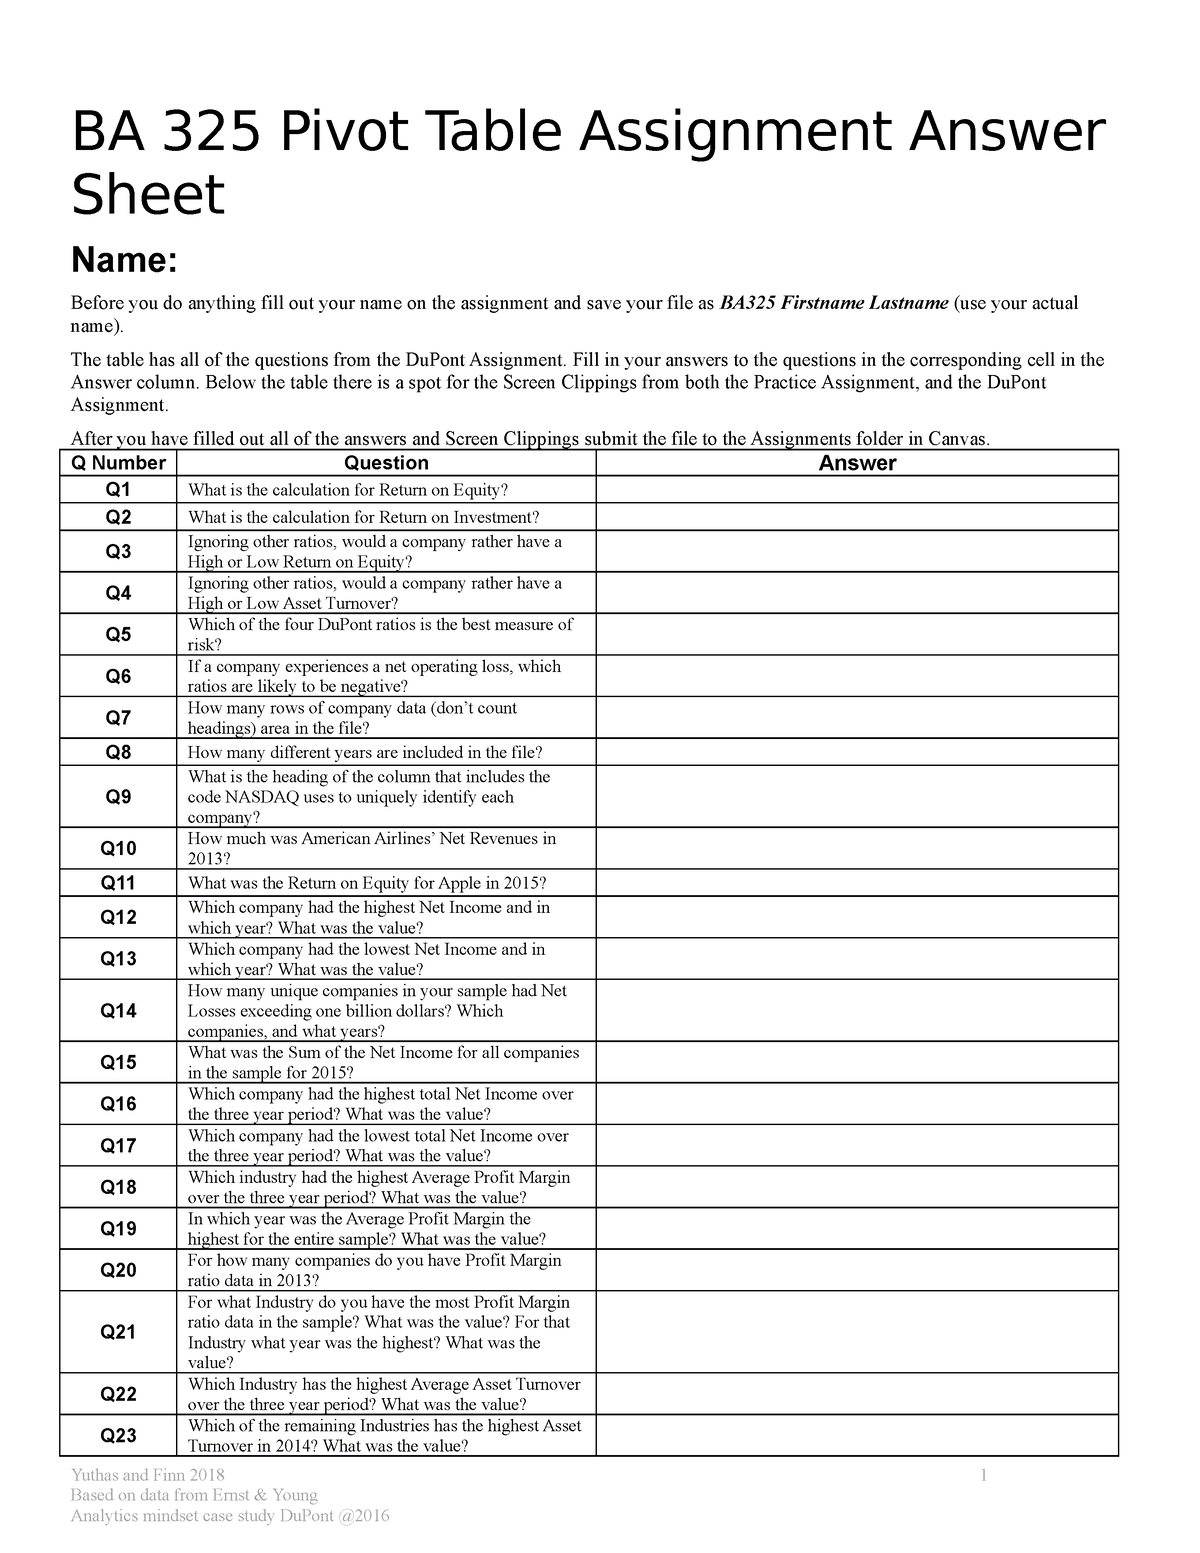 ba 325 pivot table assignment answer sheet